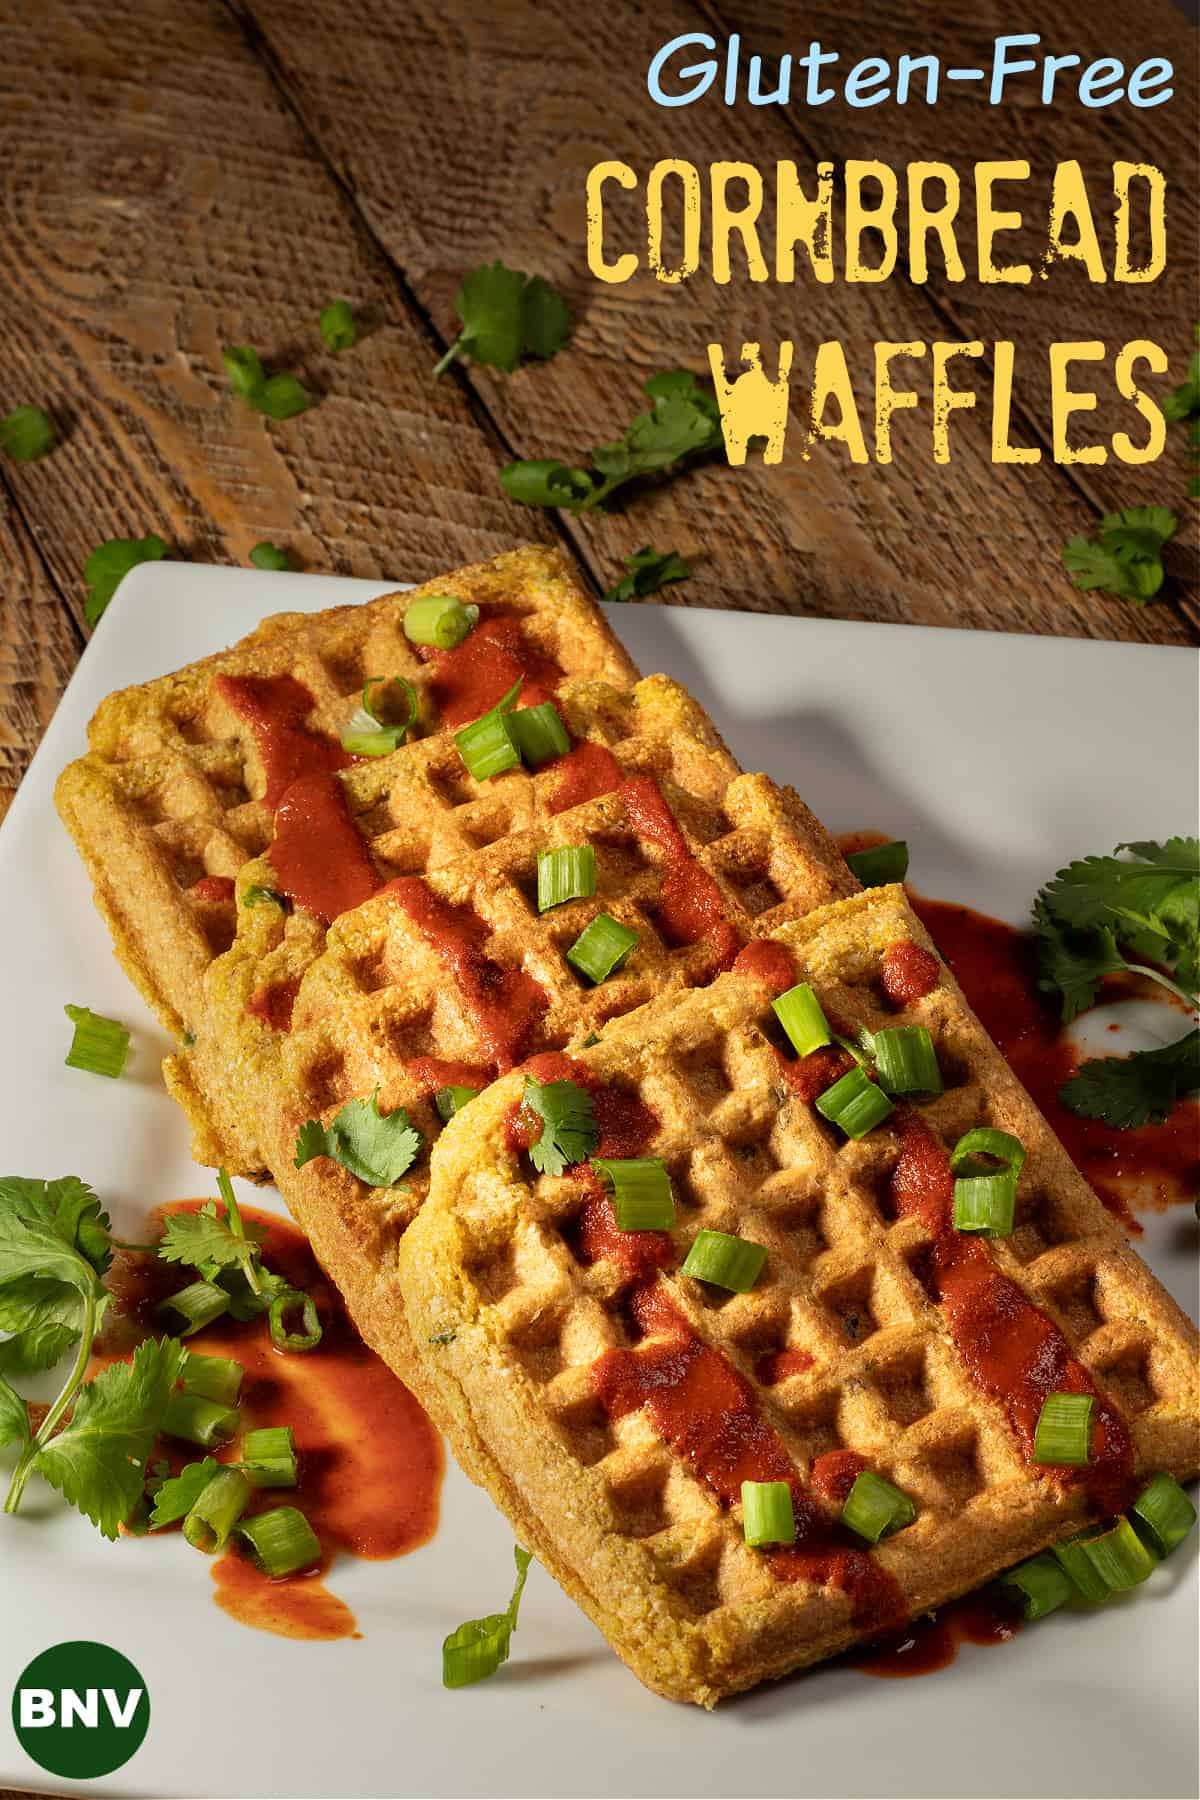 gluten-free cornbread waffles with Pinterest title 